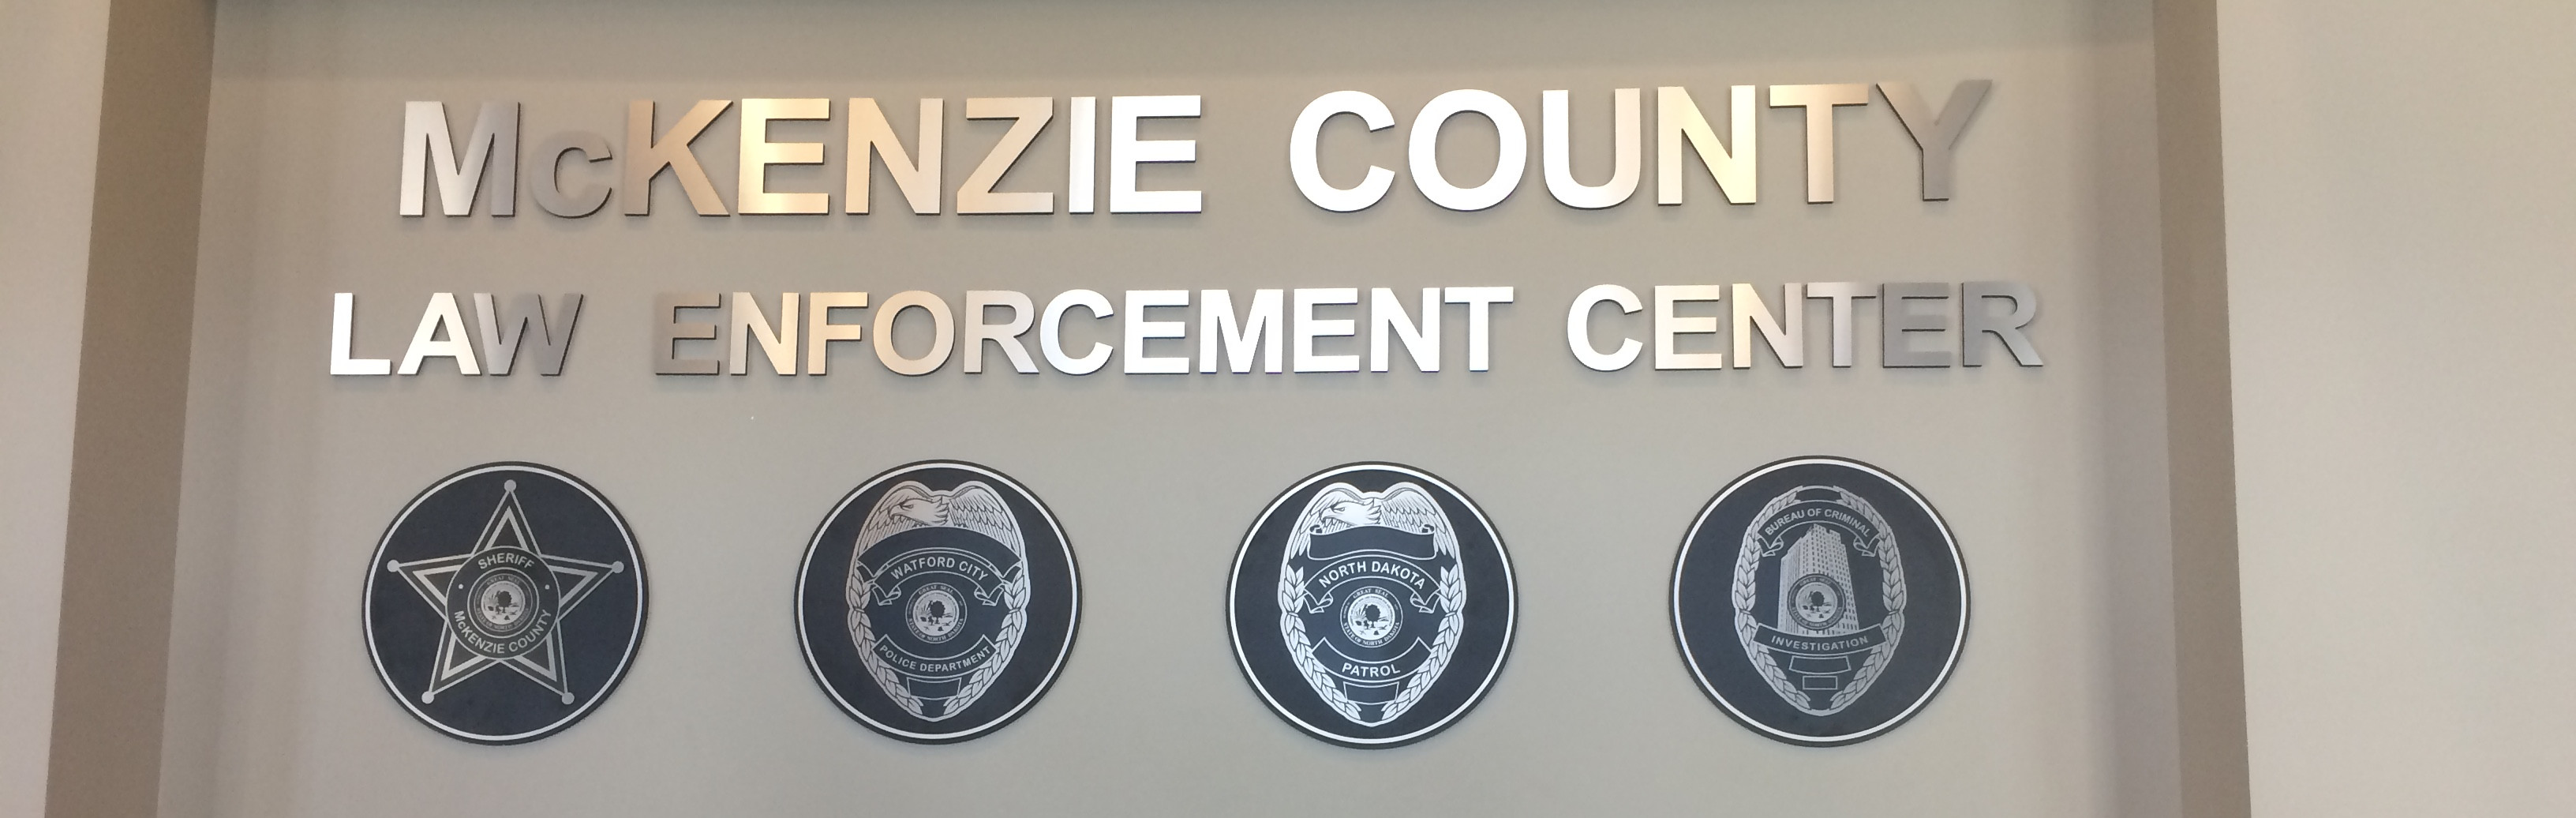 McKenzie County Law Enforcement